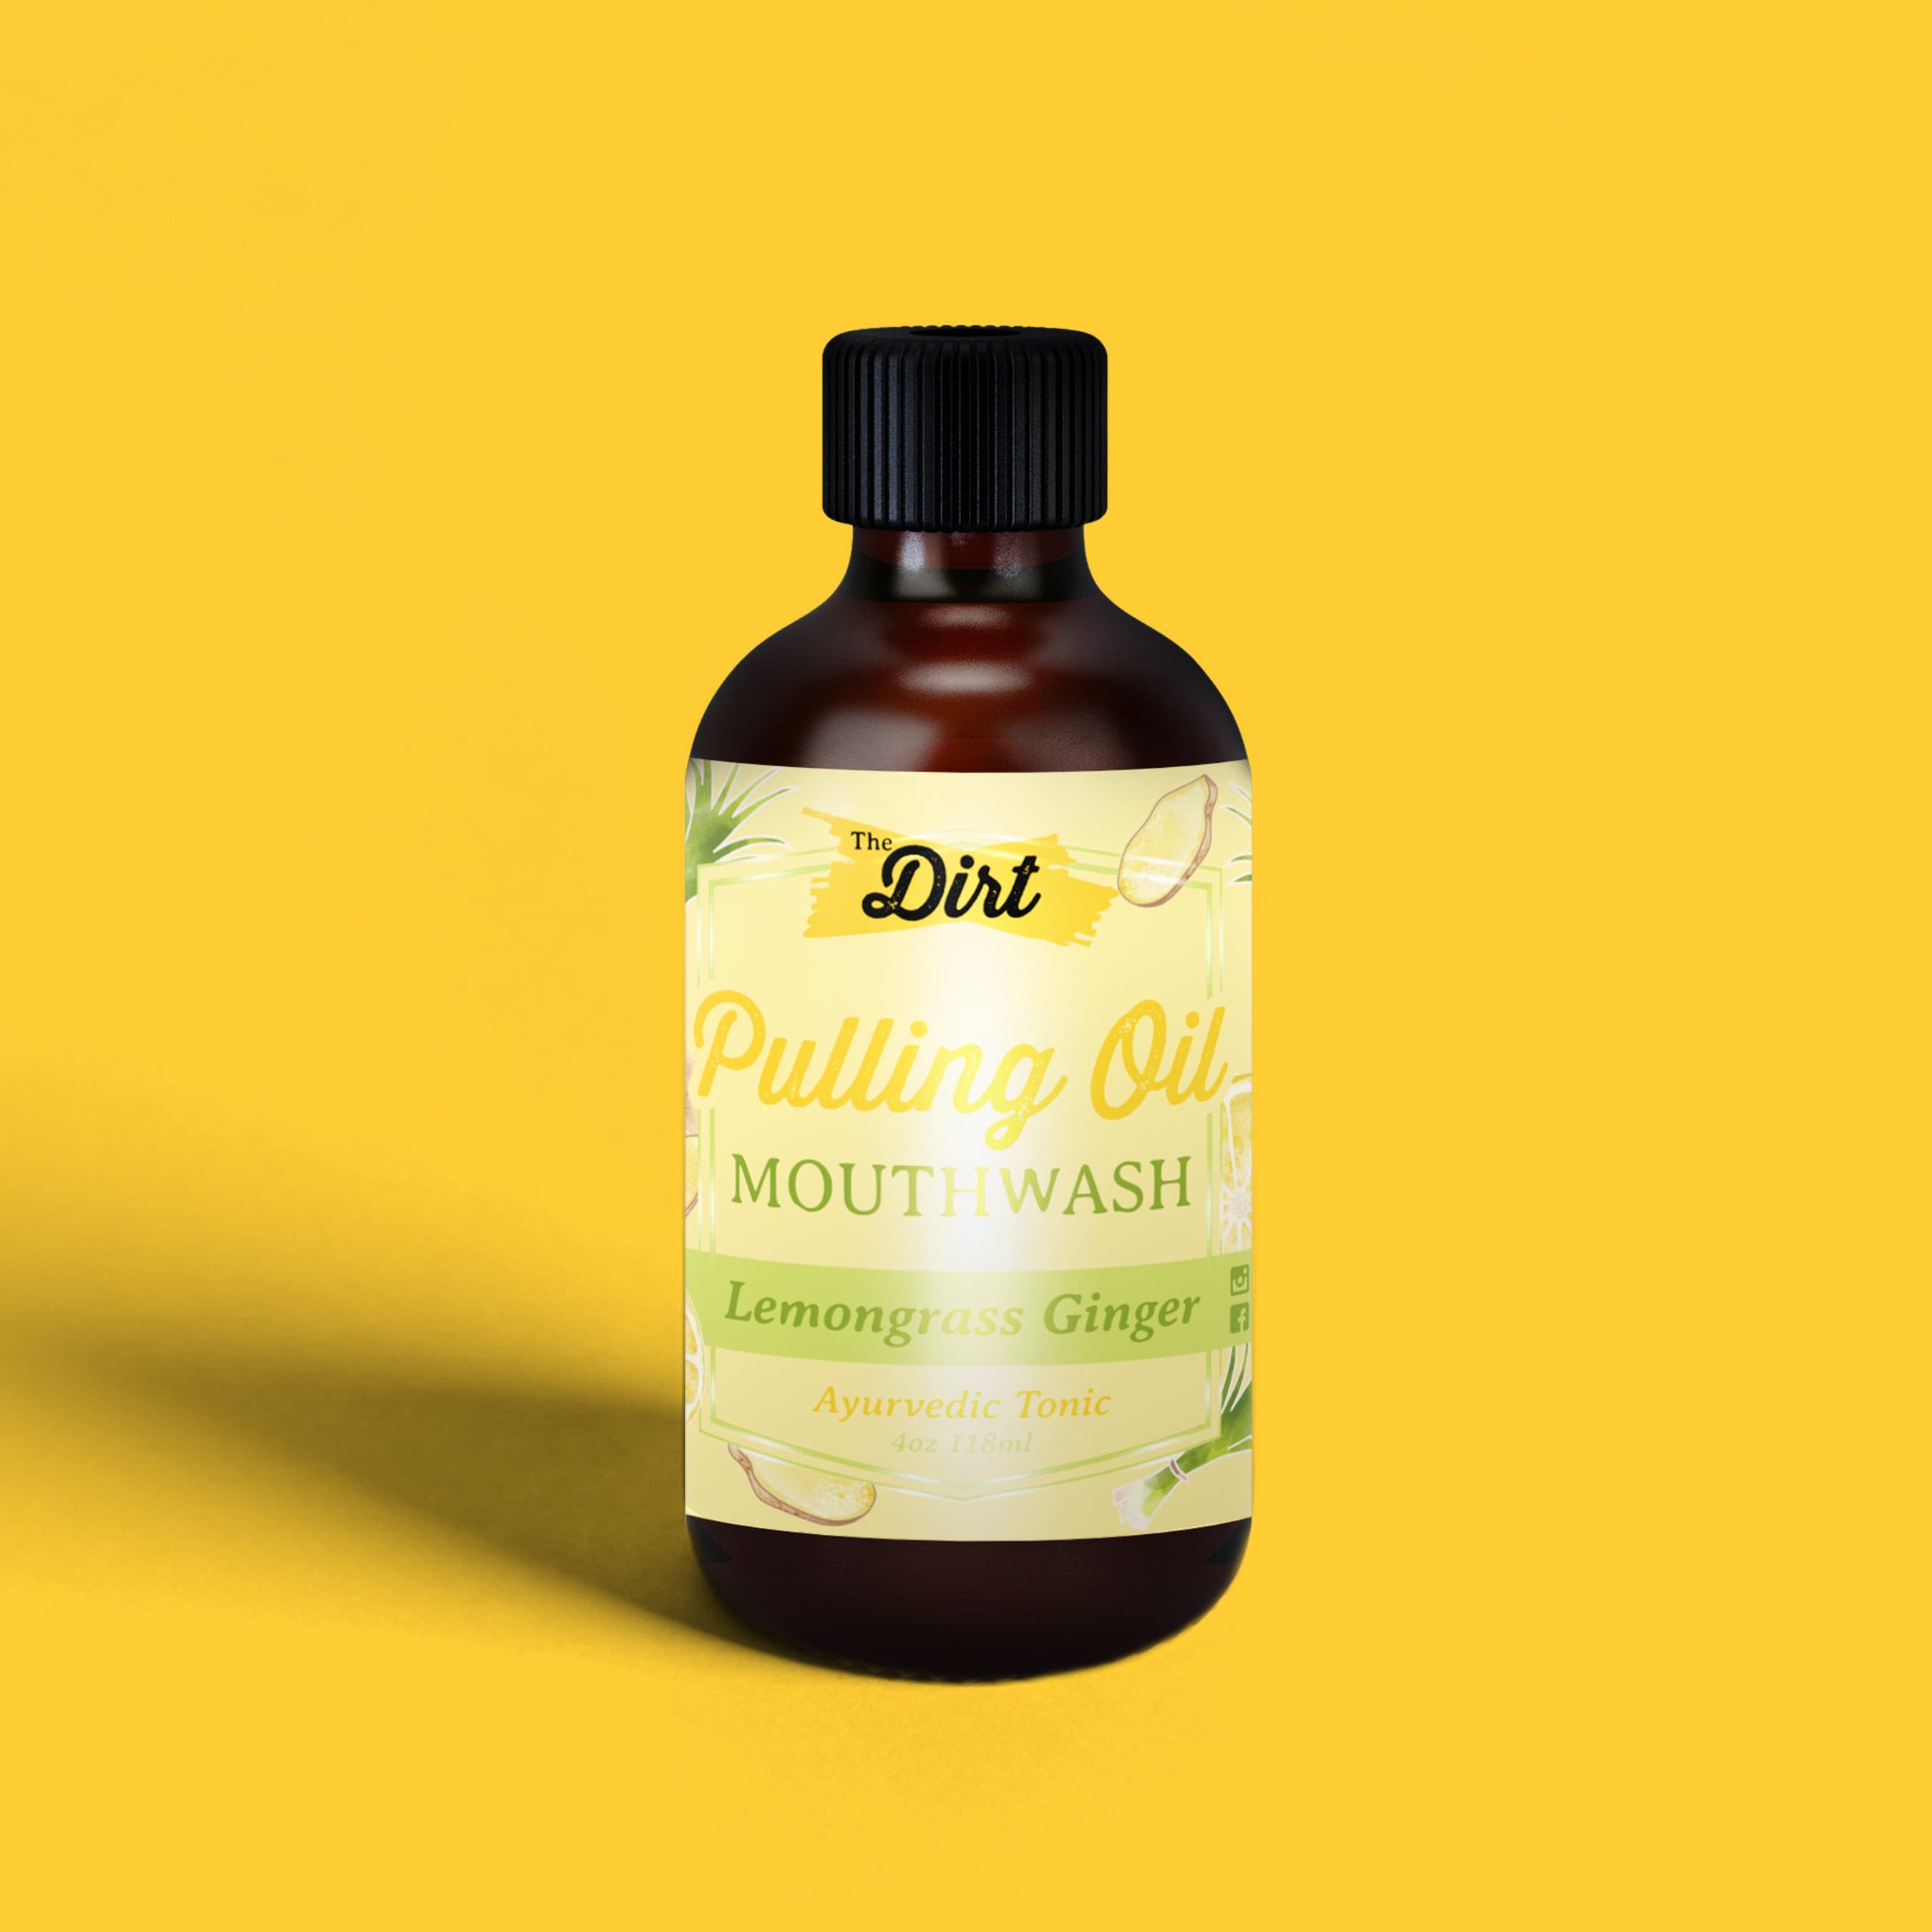 Pulling Oil Mouthwash - The Dirt - Super Natural Oral Care 4oz / Lemongrass Oral Care